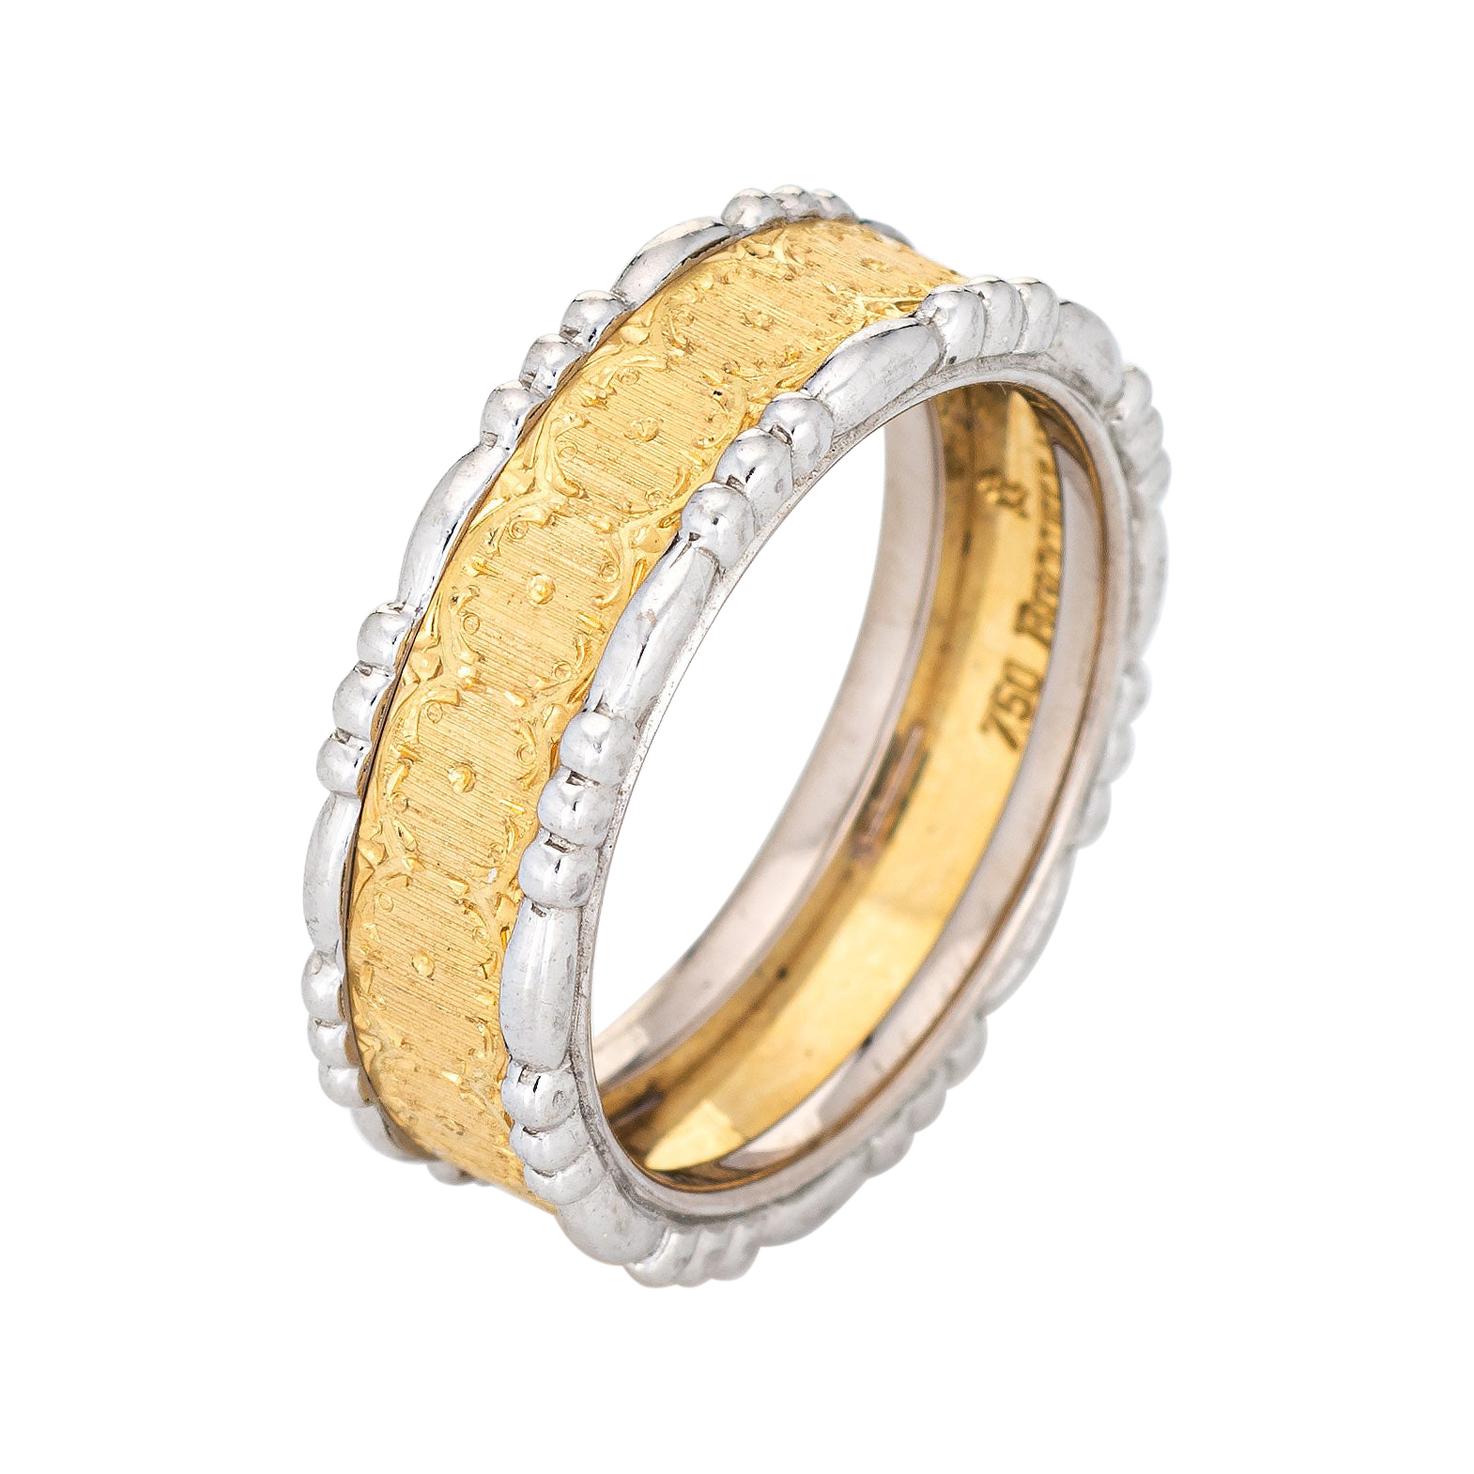 Buccellati Prestigio Band Vintage 18k Yellow Gold Ring 5 Estate Signed Jewelry